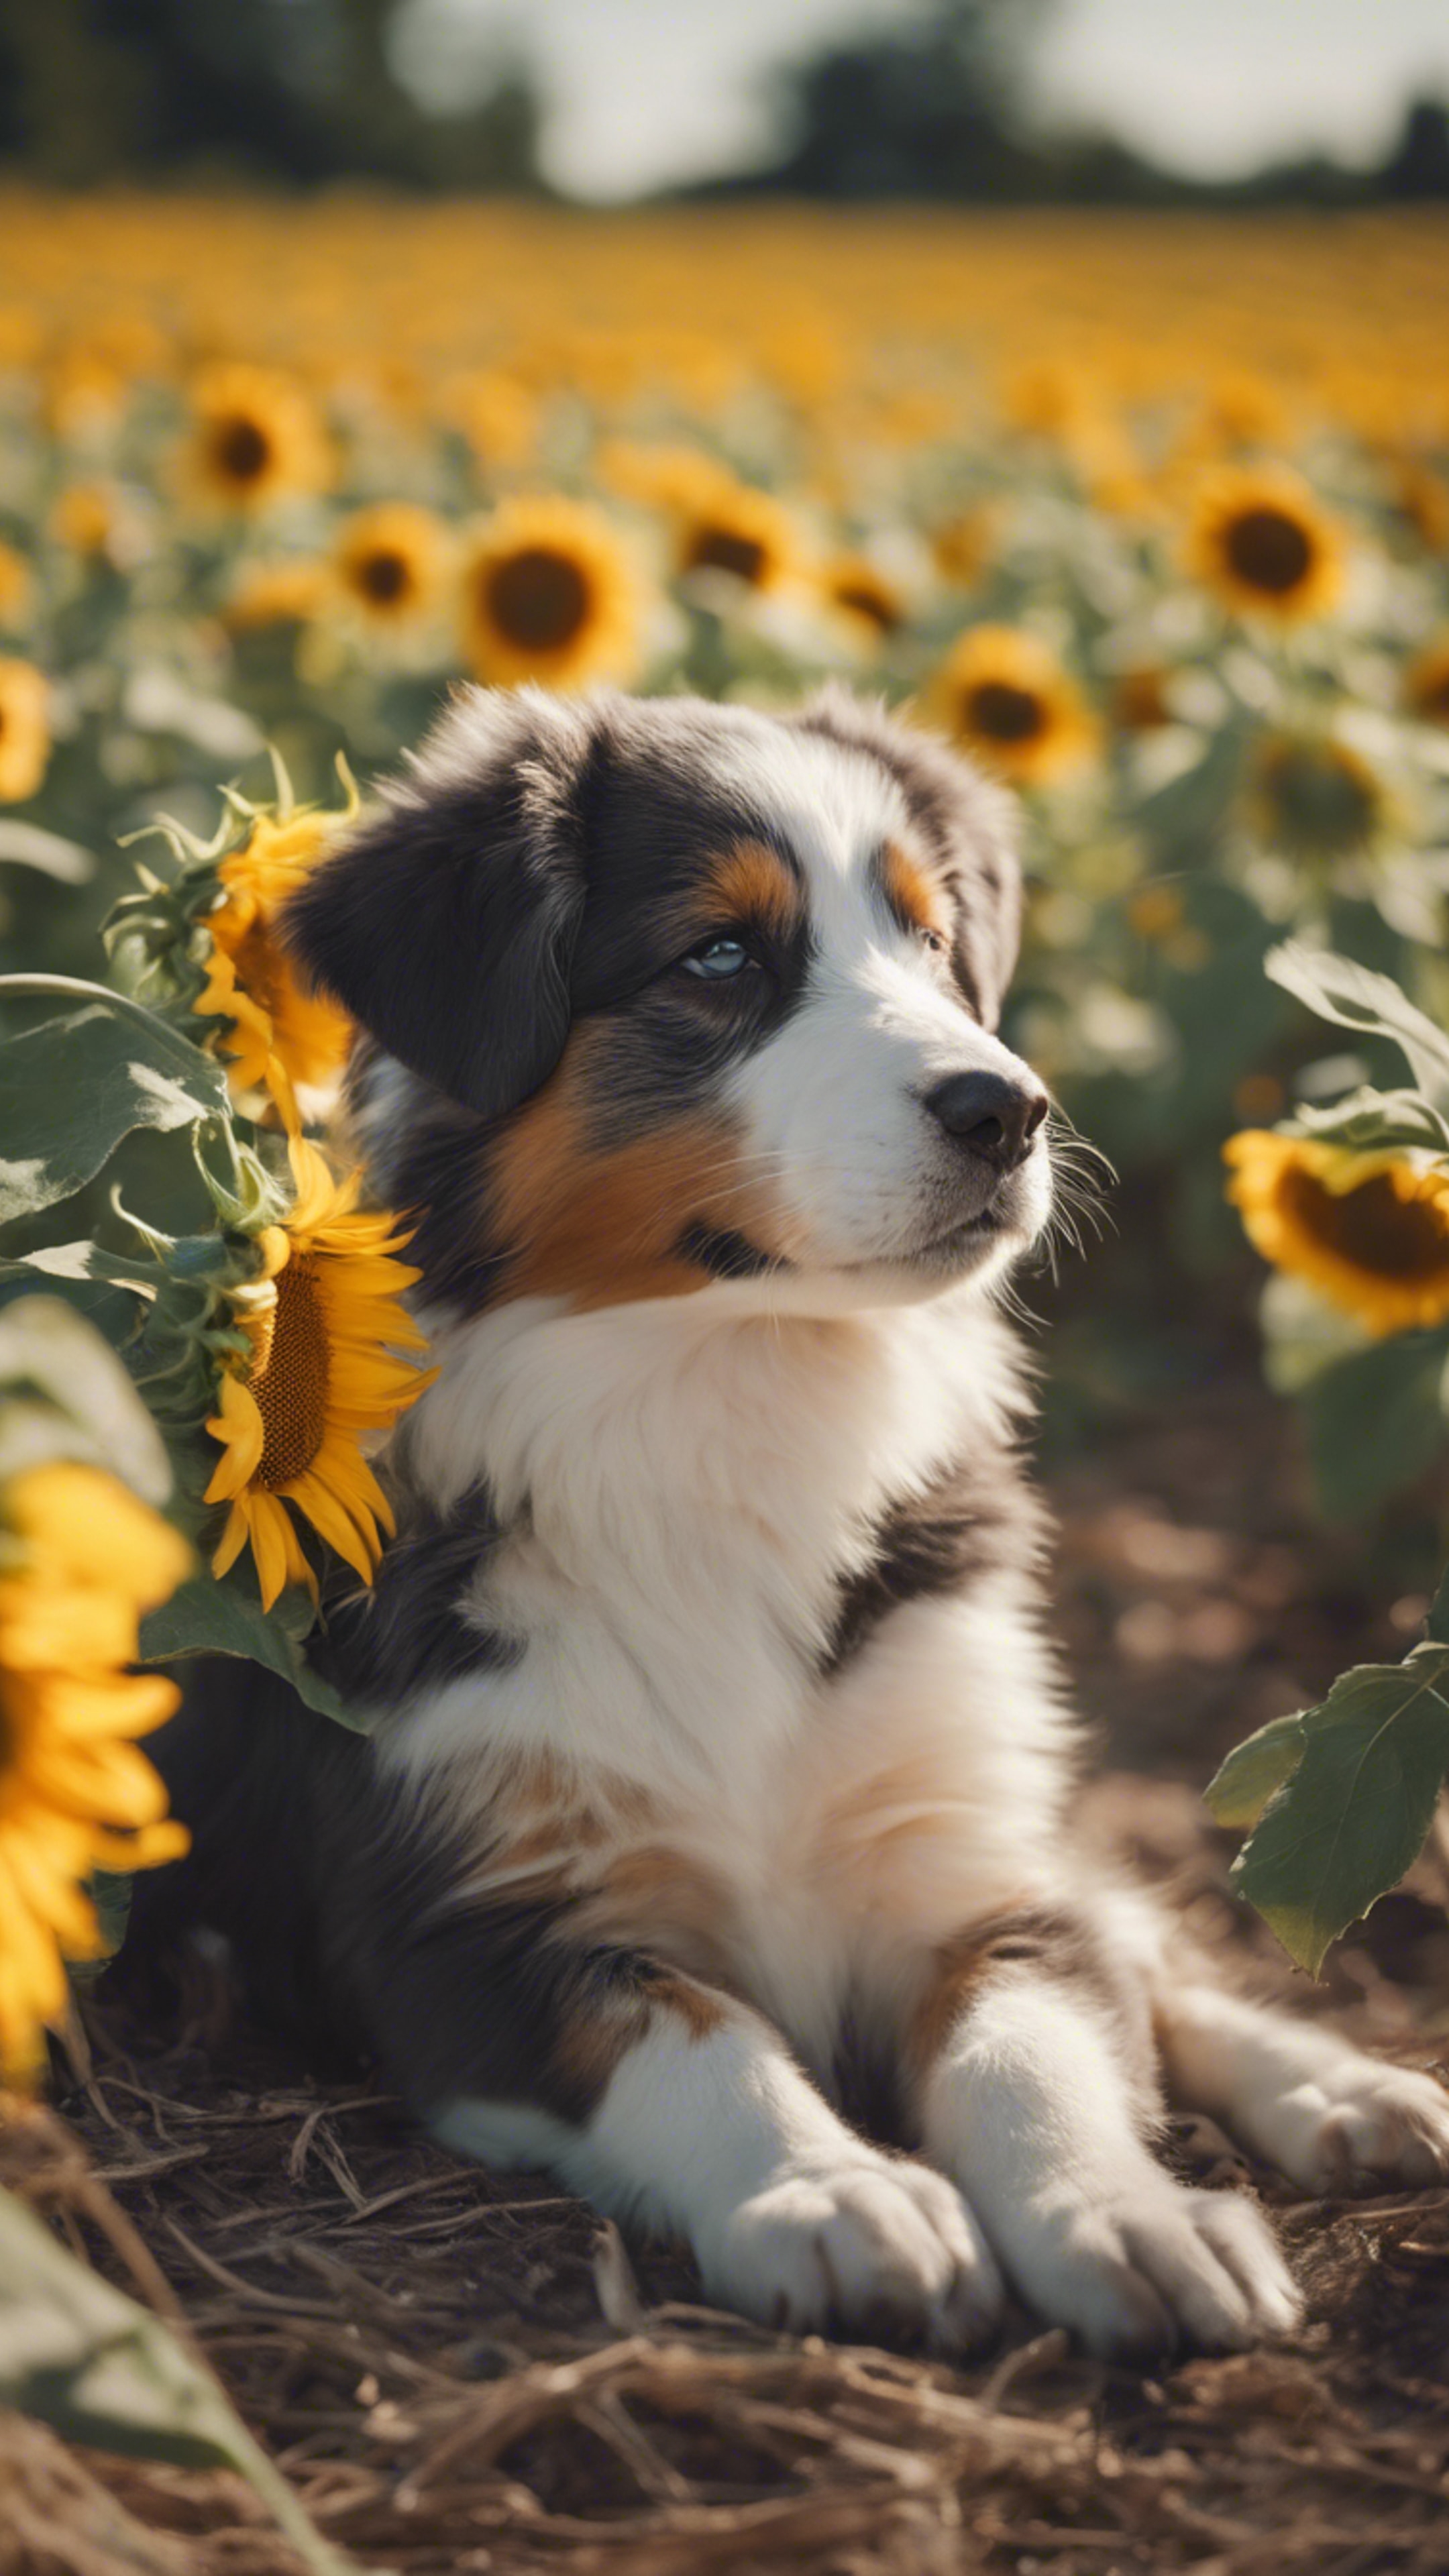 An Australian Shepard puppy dozing off in the field of blooming sunflowers under the summer sun. Hintergrund[3112e983c8704a9792f4]